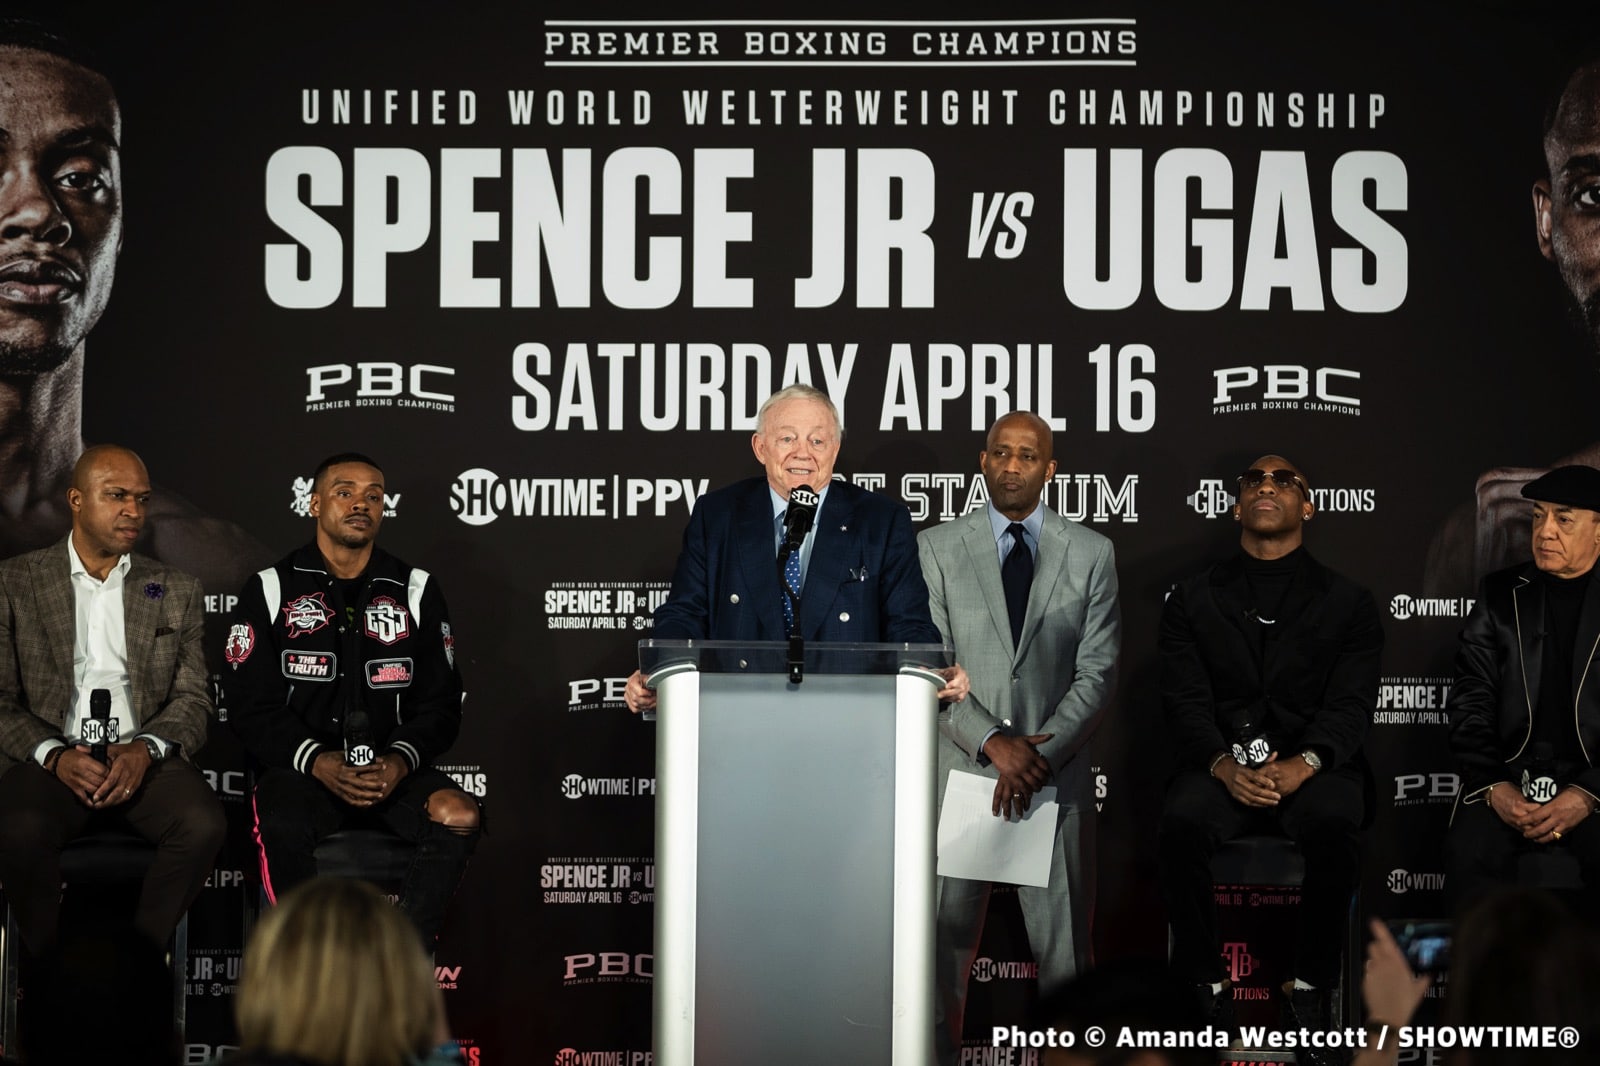 Errol Spence Jr., Shawn Porter, Yordenis Ugas boxing image / photo